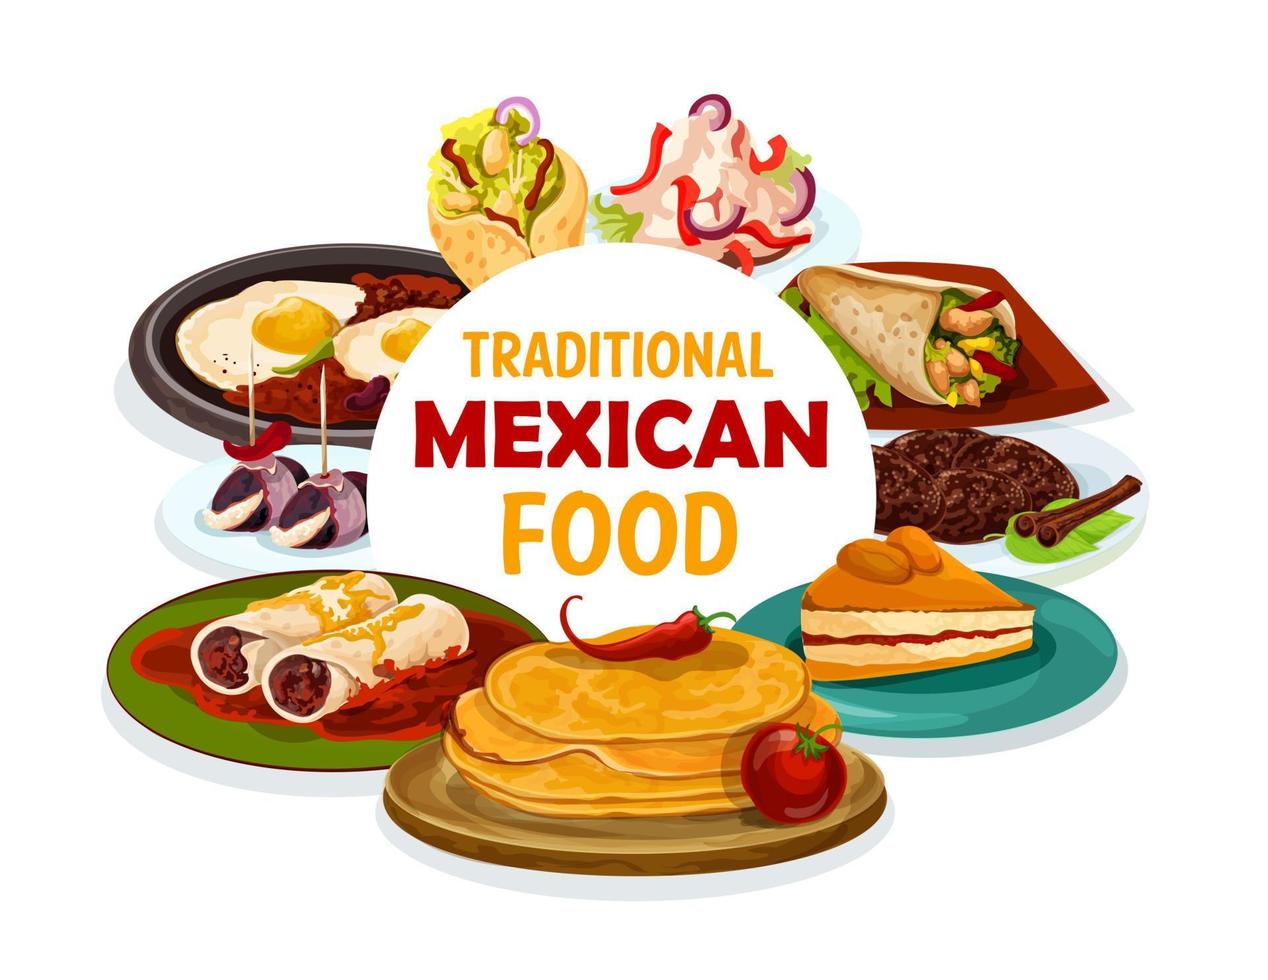 comida tradicional mexicana, platos autenticos de mexico vector